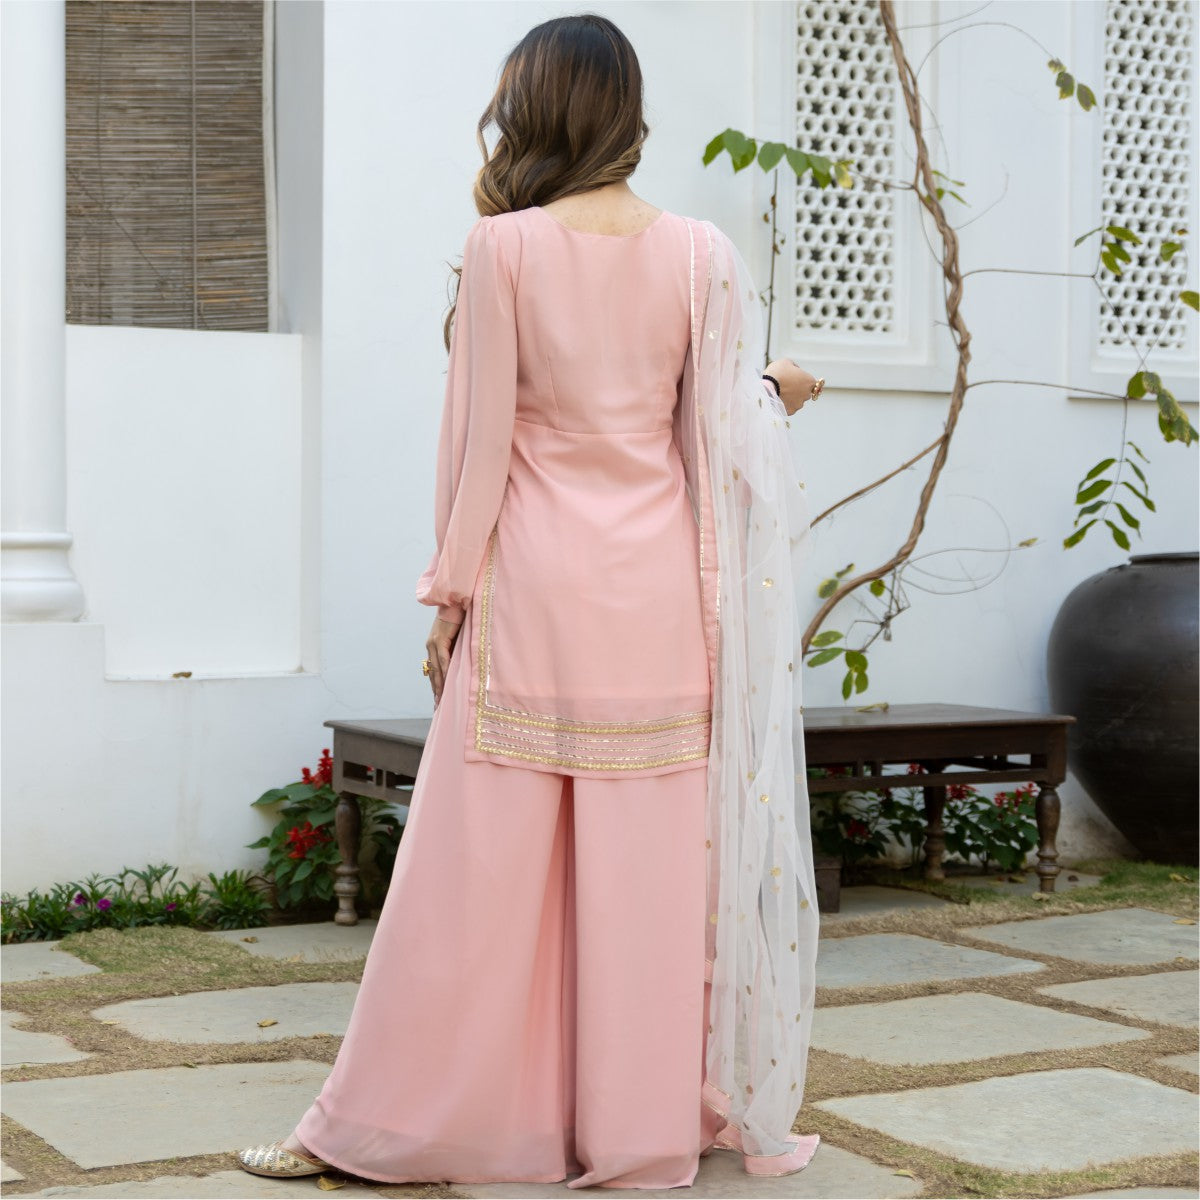 Light Pink Pink Kurtis Online Shopping for Women at Low Prices